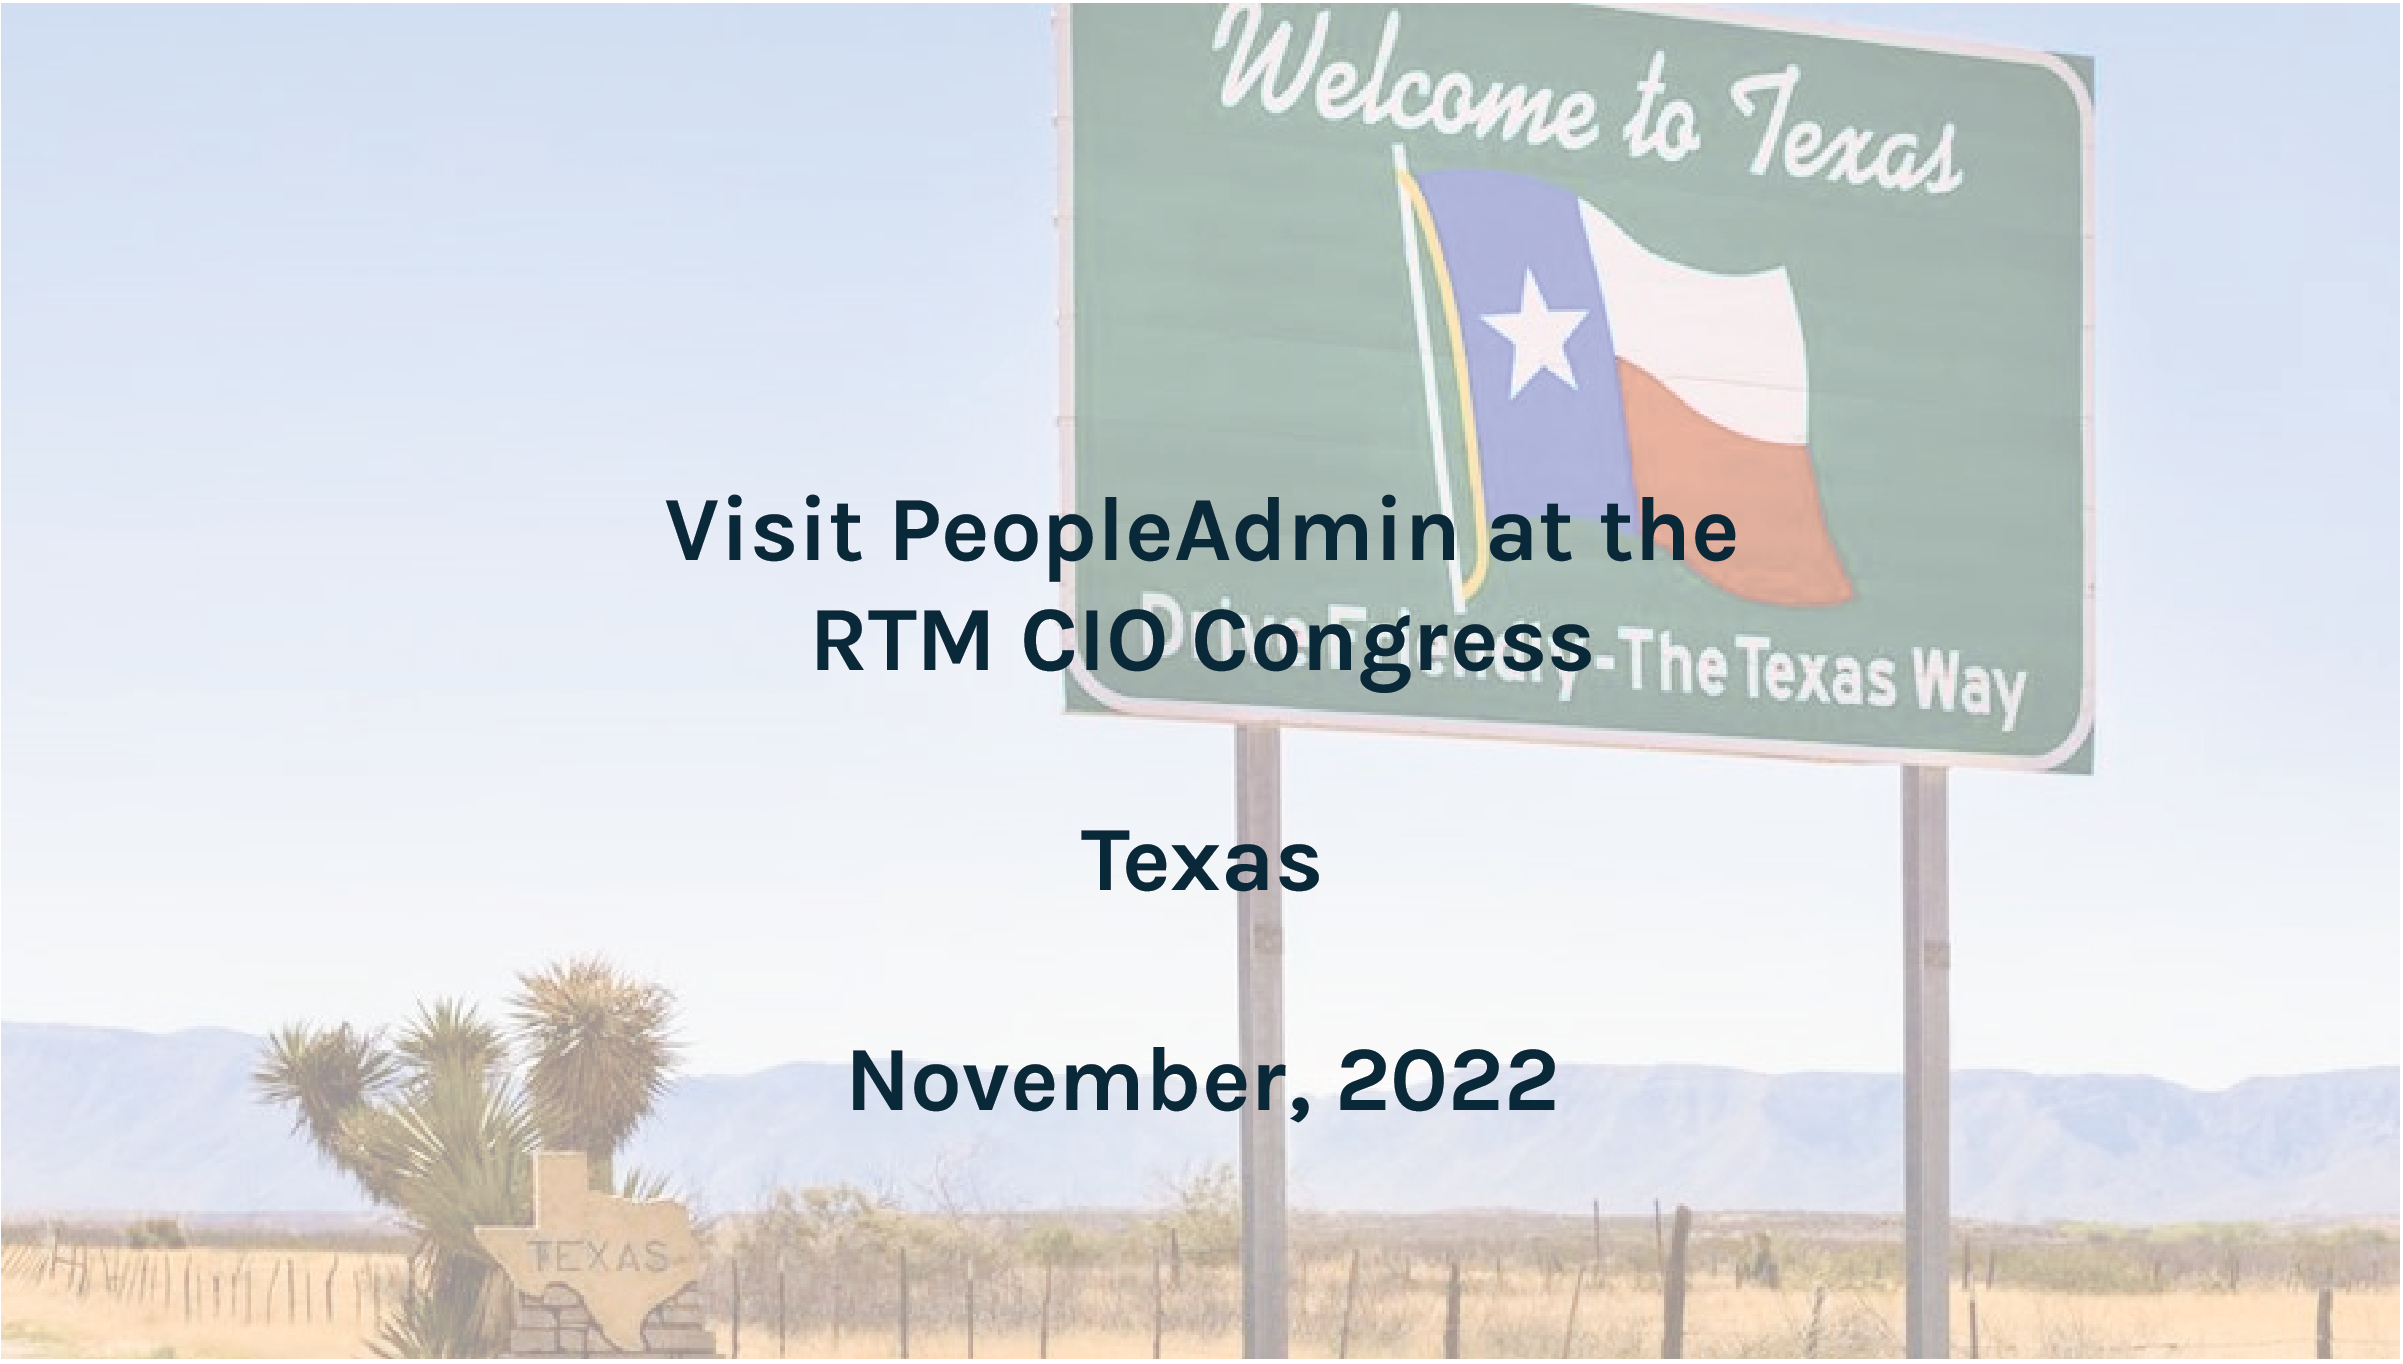 Visit PeopleAdmin at the RTM CIO Congress